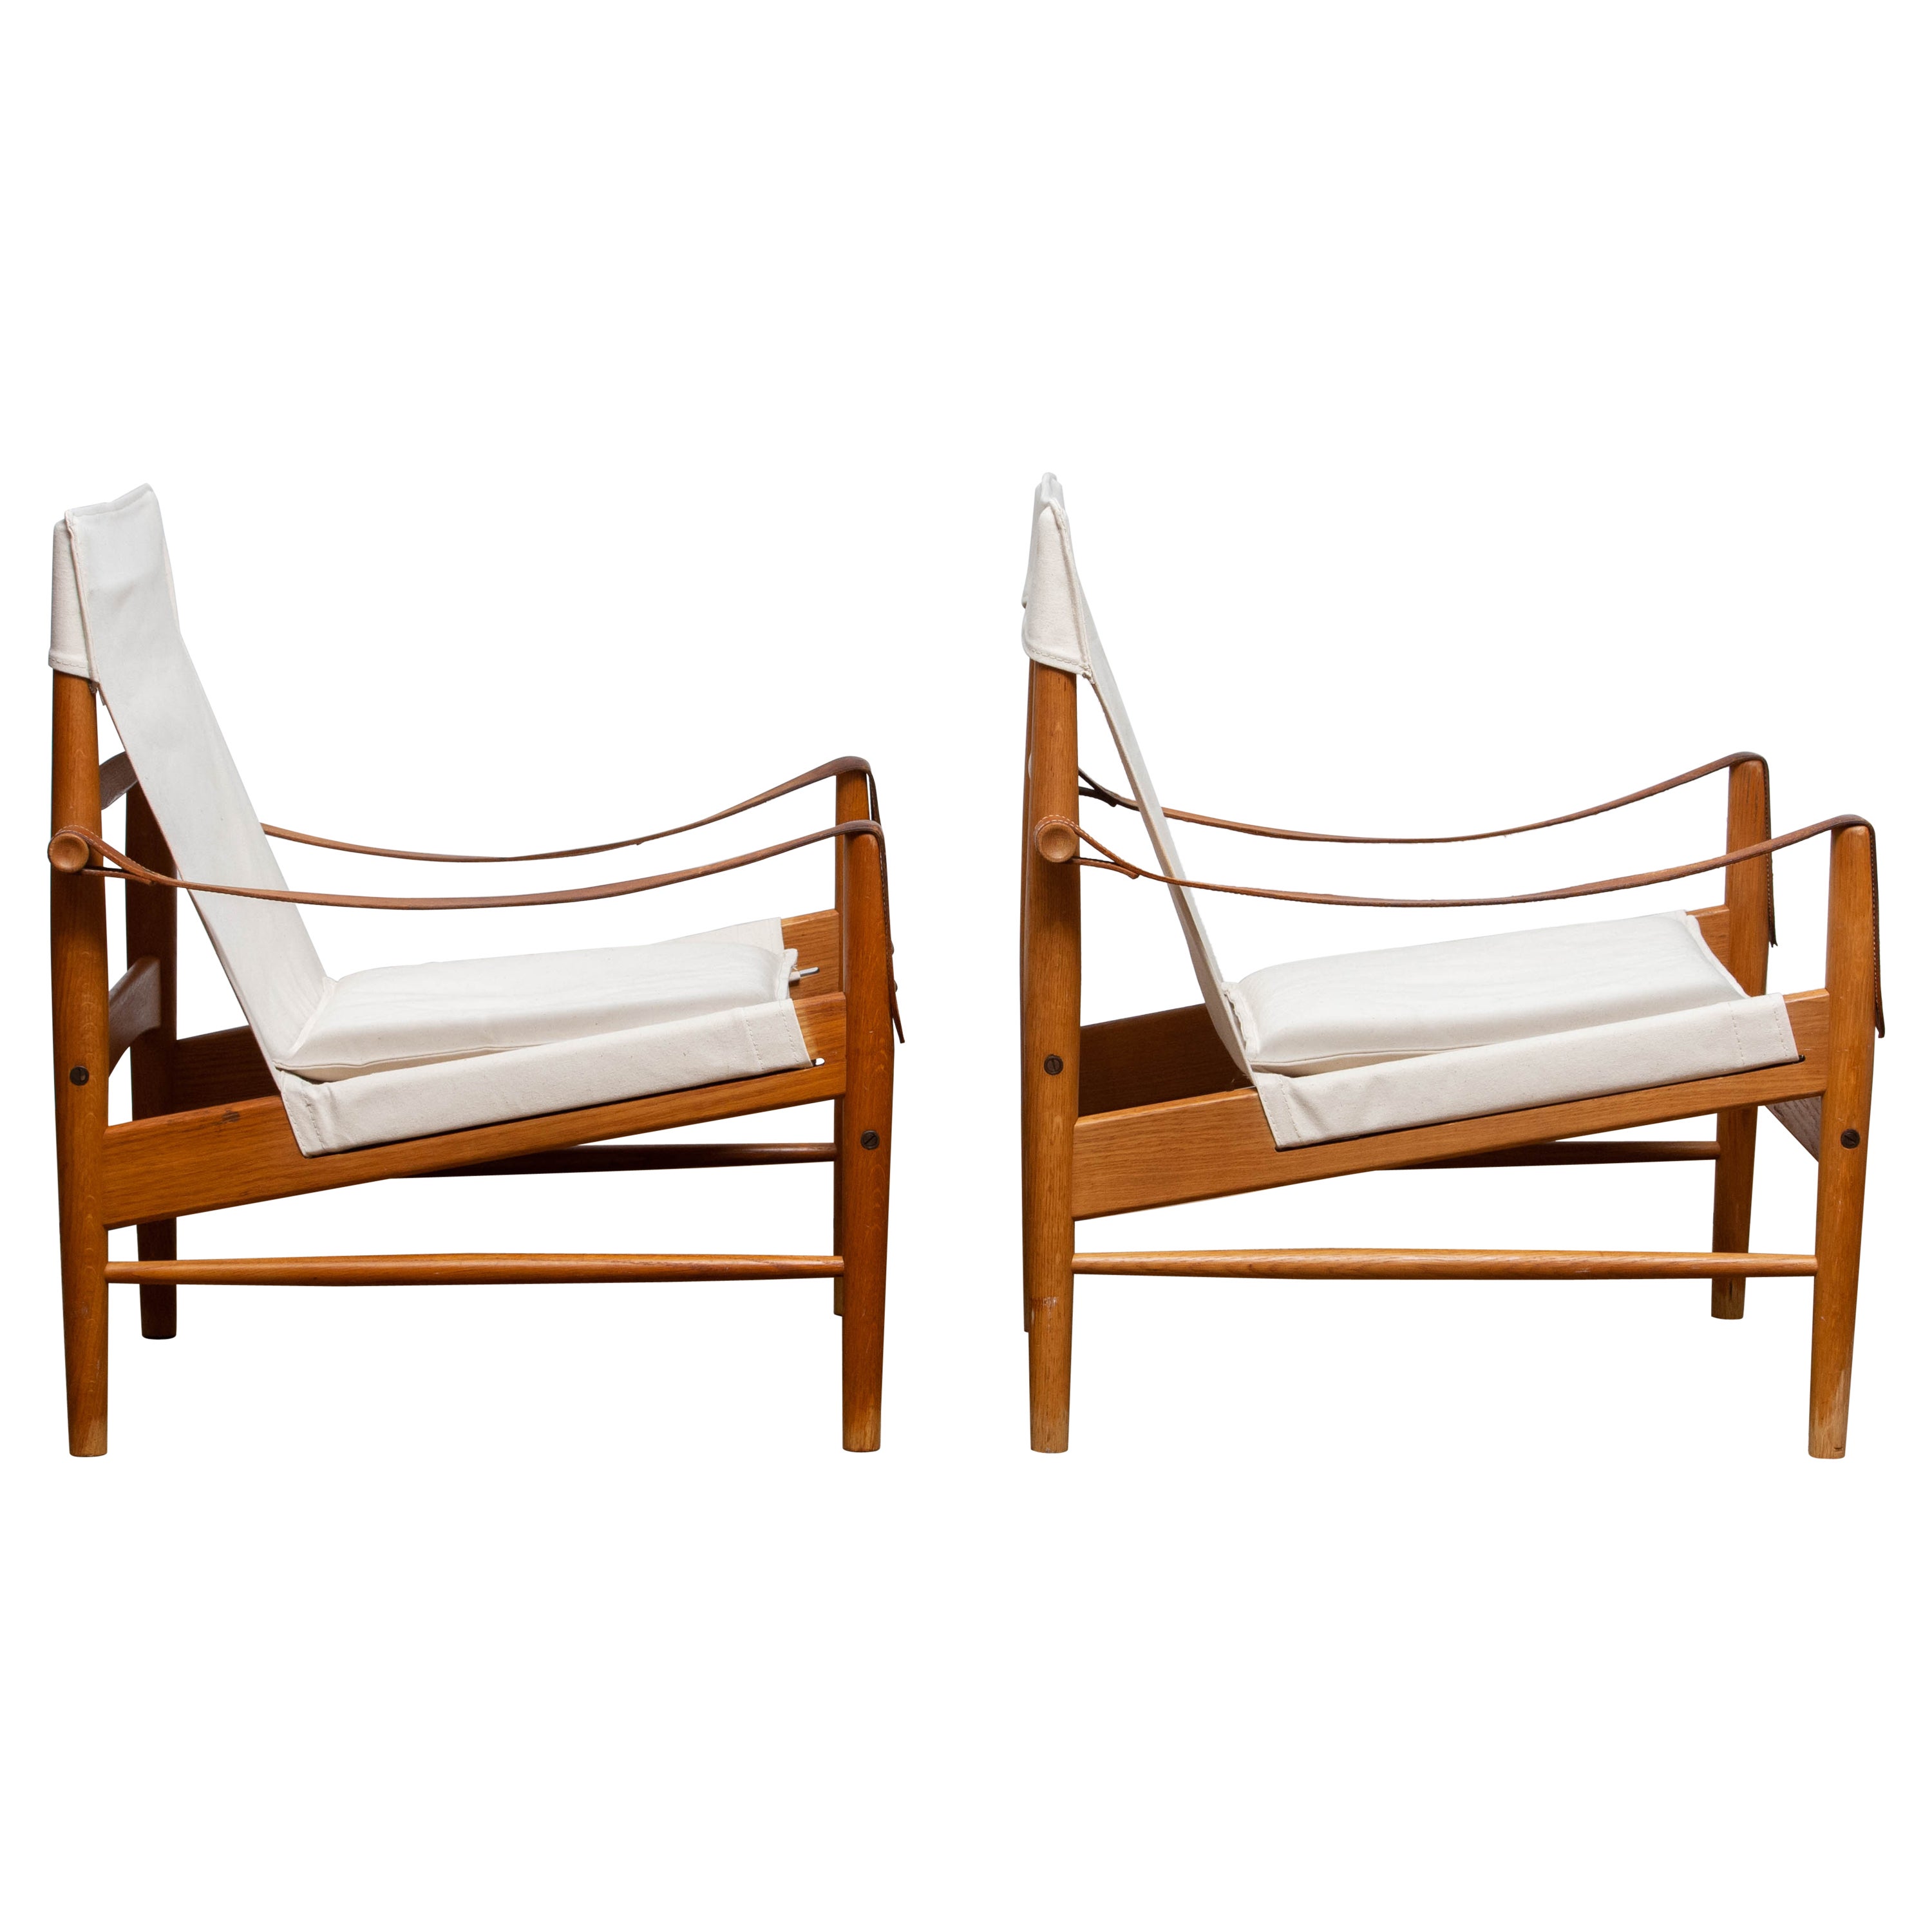 1960s, Pair of Safari Chairs by Hans Olsen for Viska Möbler in Kinna, Sweden